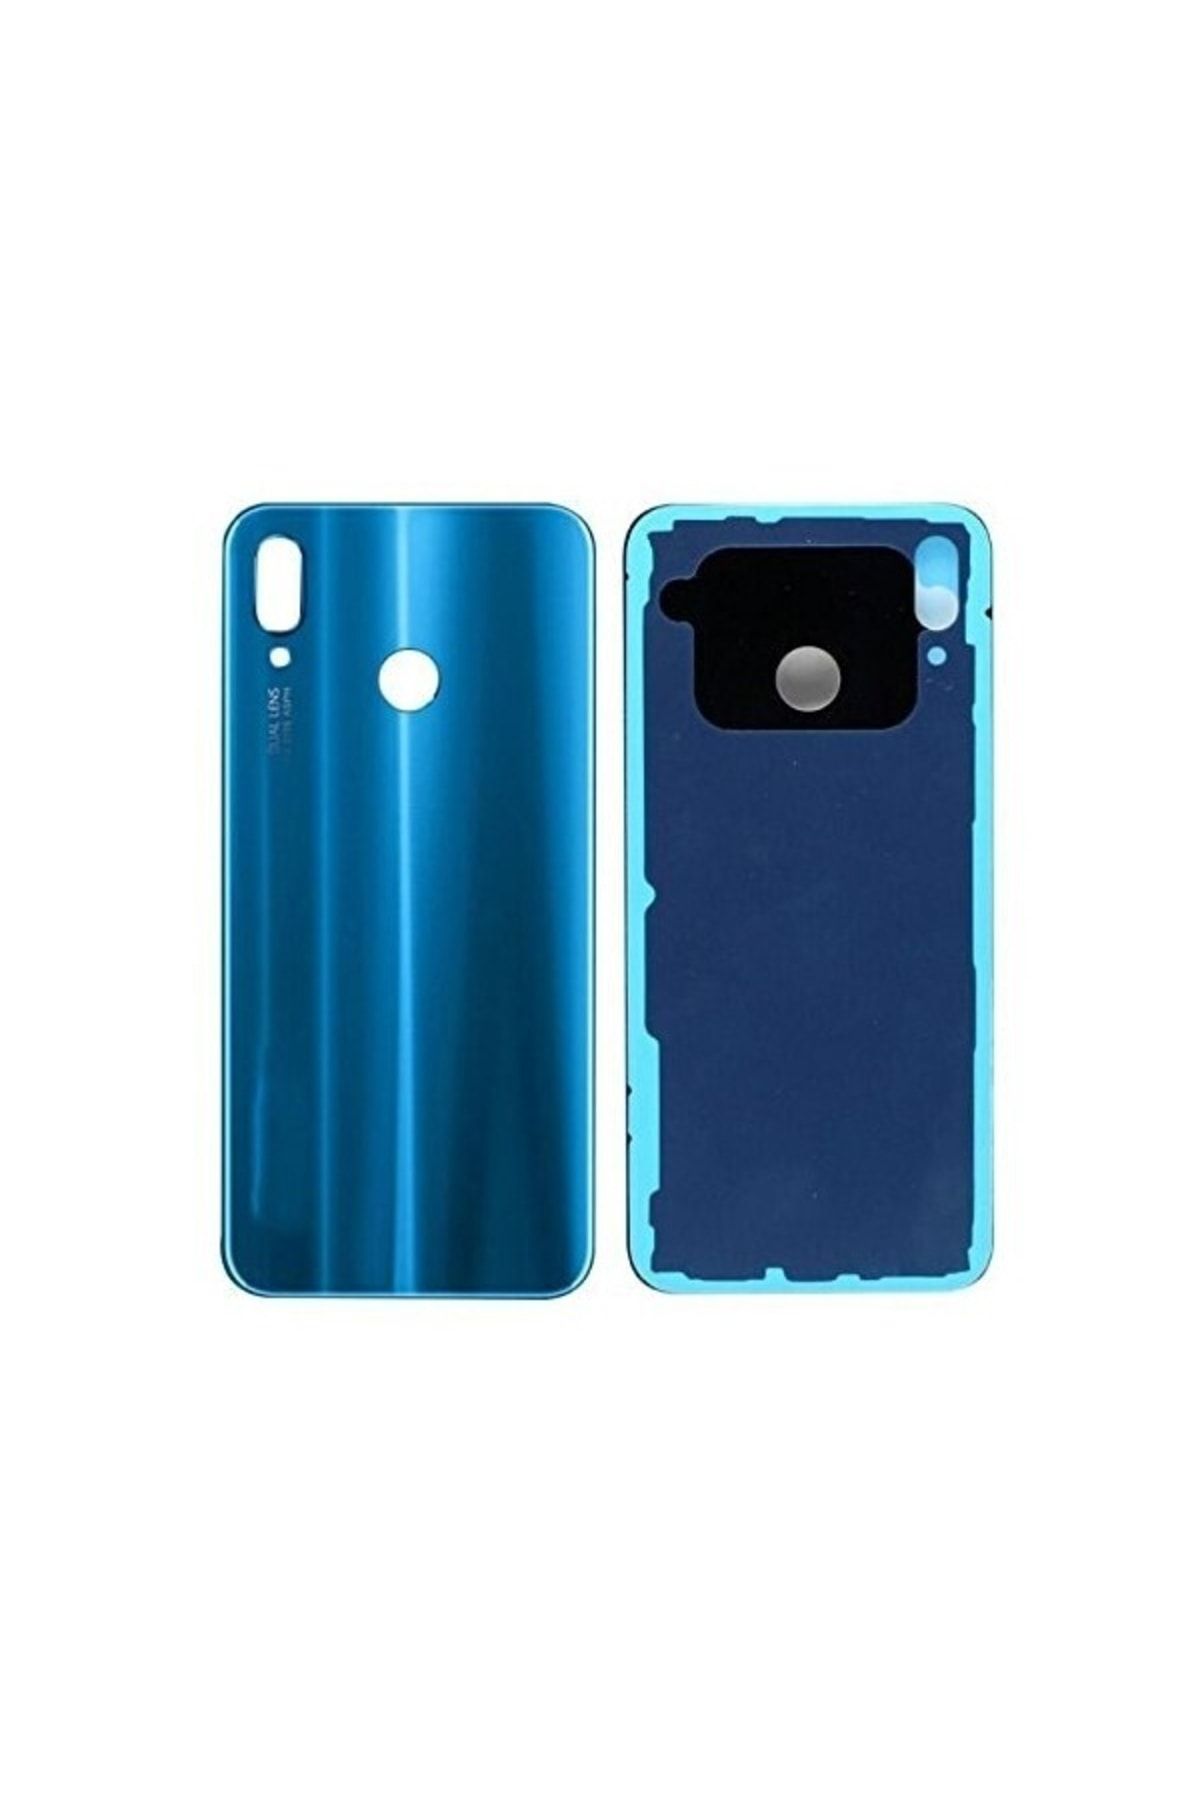 EDA TEKNİK Huawei P20 Lite Arka Kapak Pil Batarya Kapağı Mavi